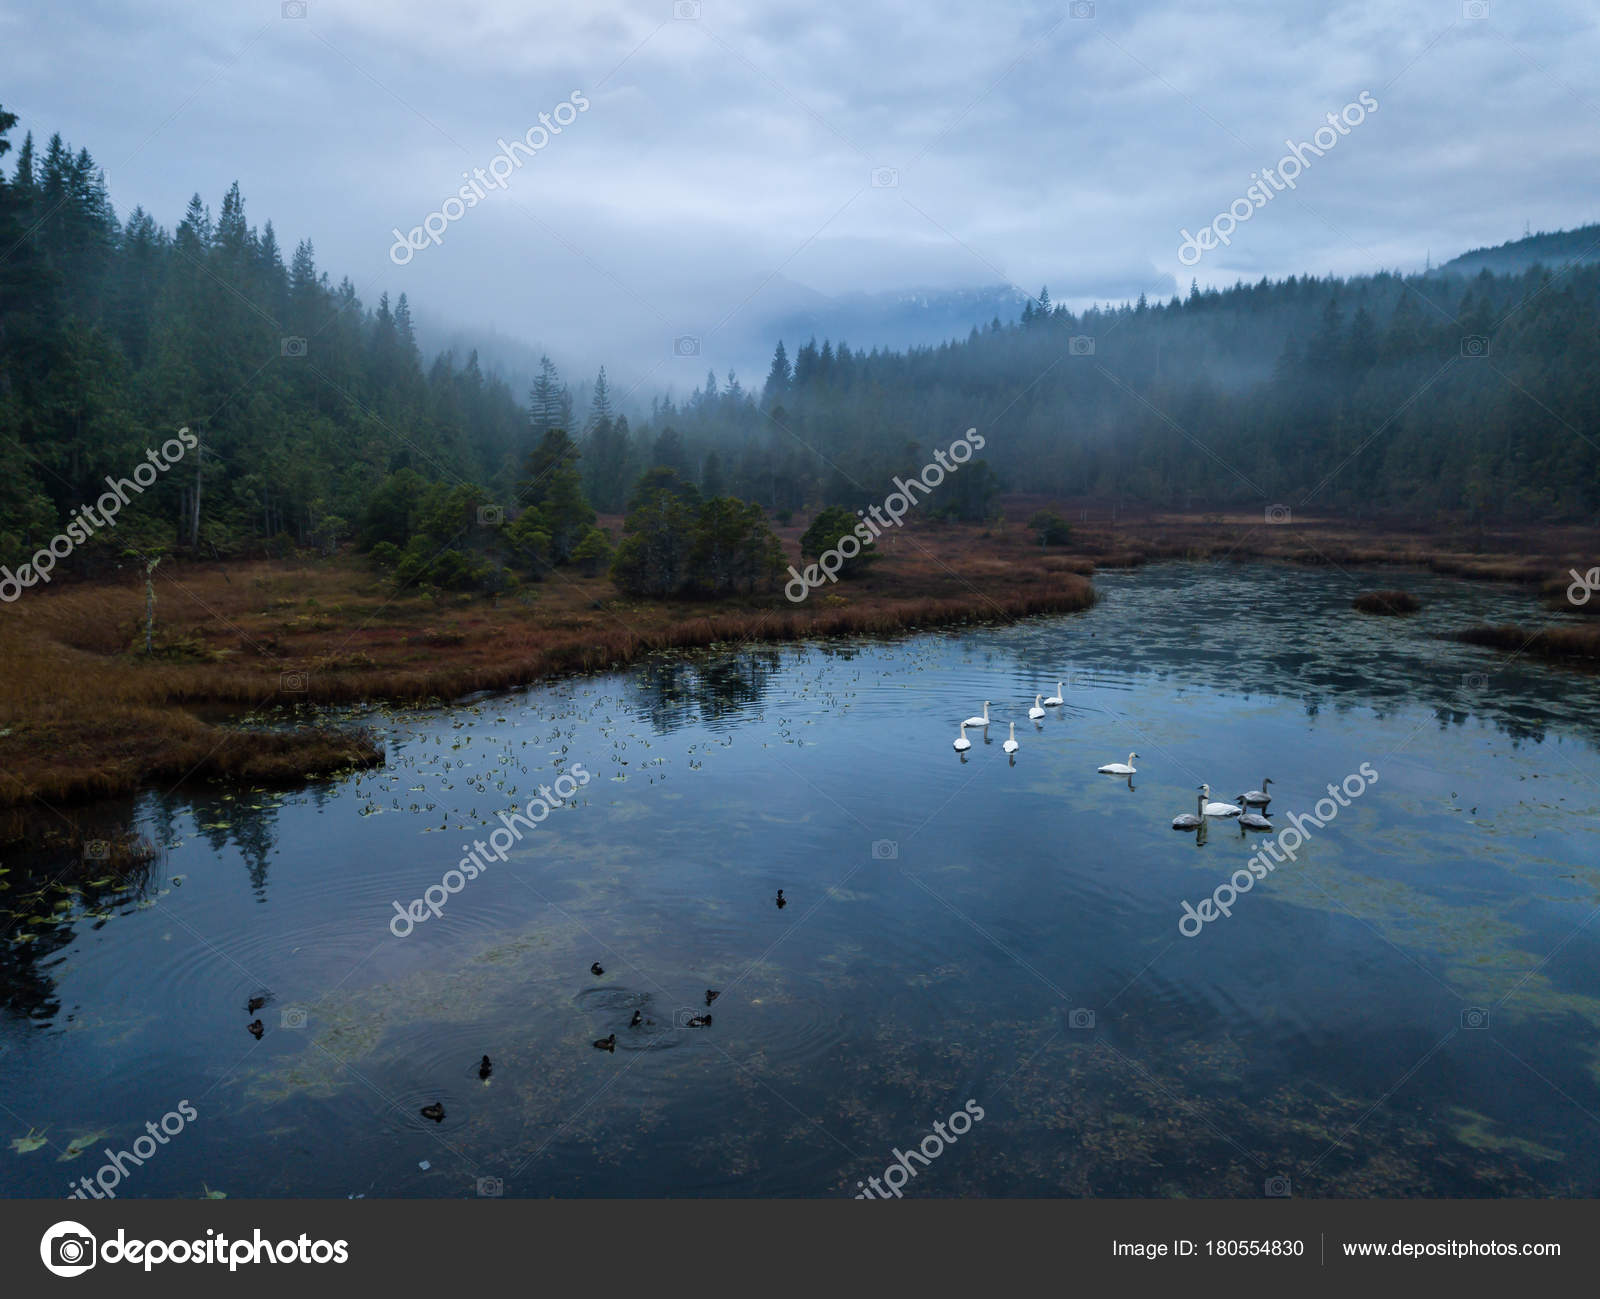 Swampy Lake with Swans — Stock Photo © edb3_16 #180554830